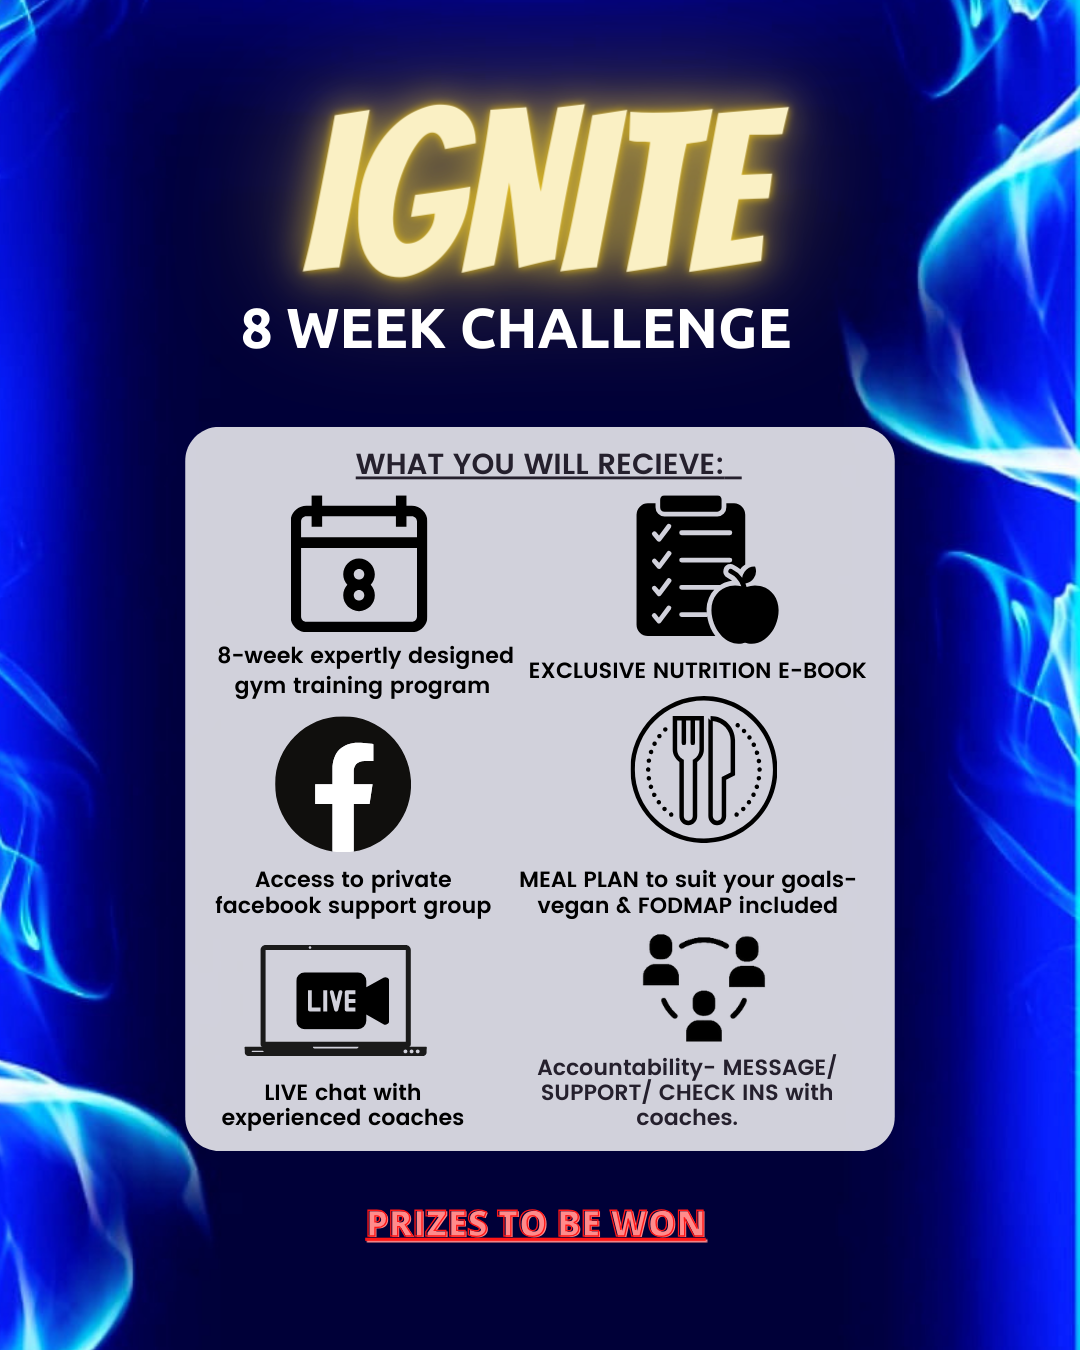 Ignite challenge